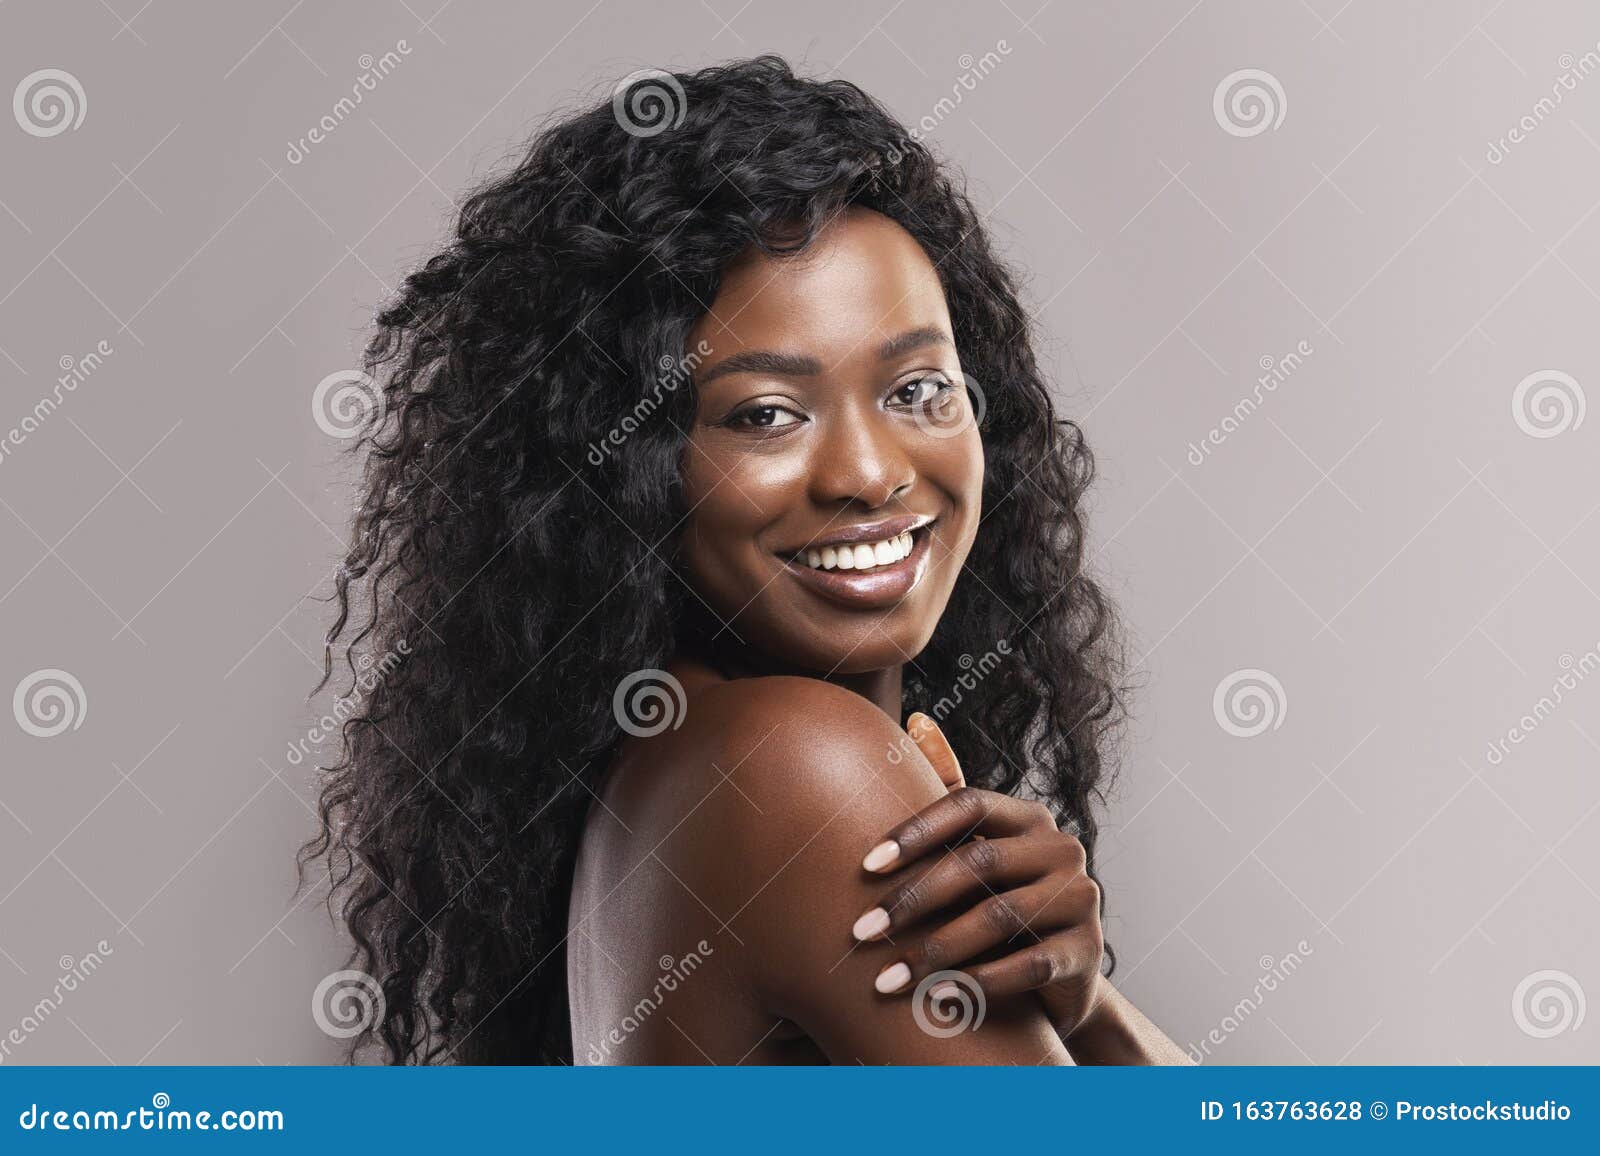 nude smiling girls africa